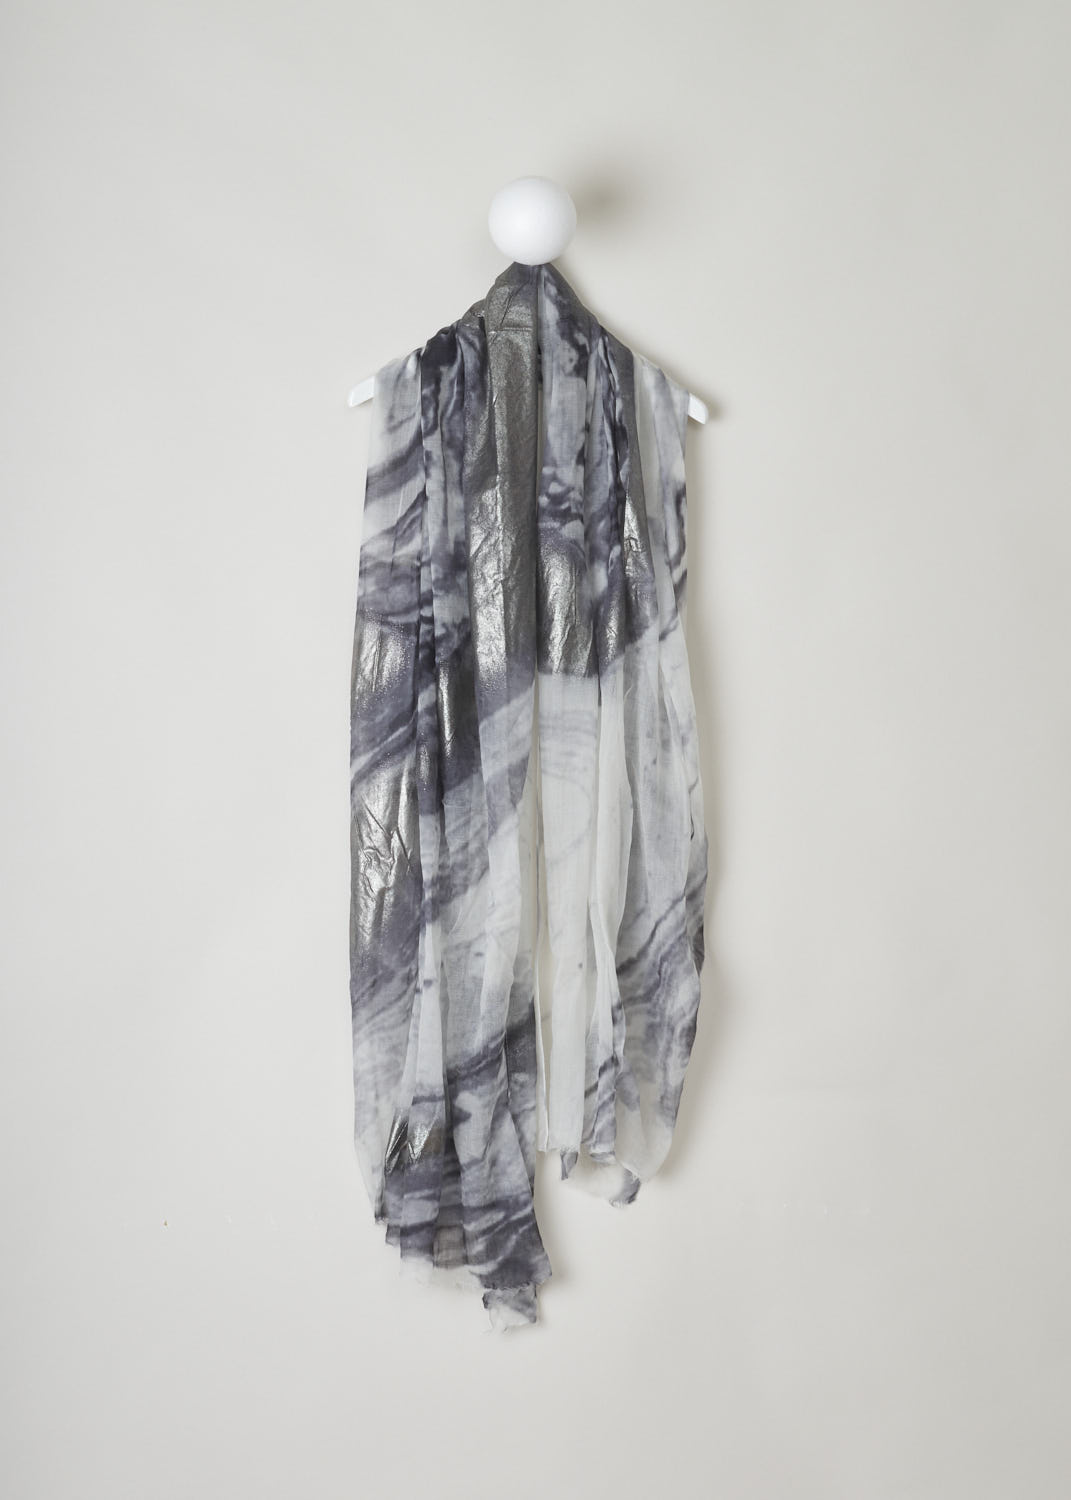 BRUNELLO CUCINELLI, SHAWL IN GREY WITH METALLIC DETAIL, MSCDAG055_CV477, Grey, Front, Beautiful scarf in grey tones with metallic details. The scarf has a raw hem. 
